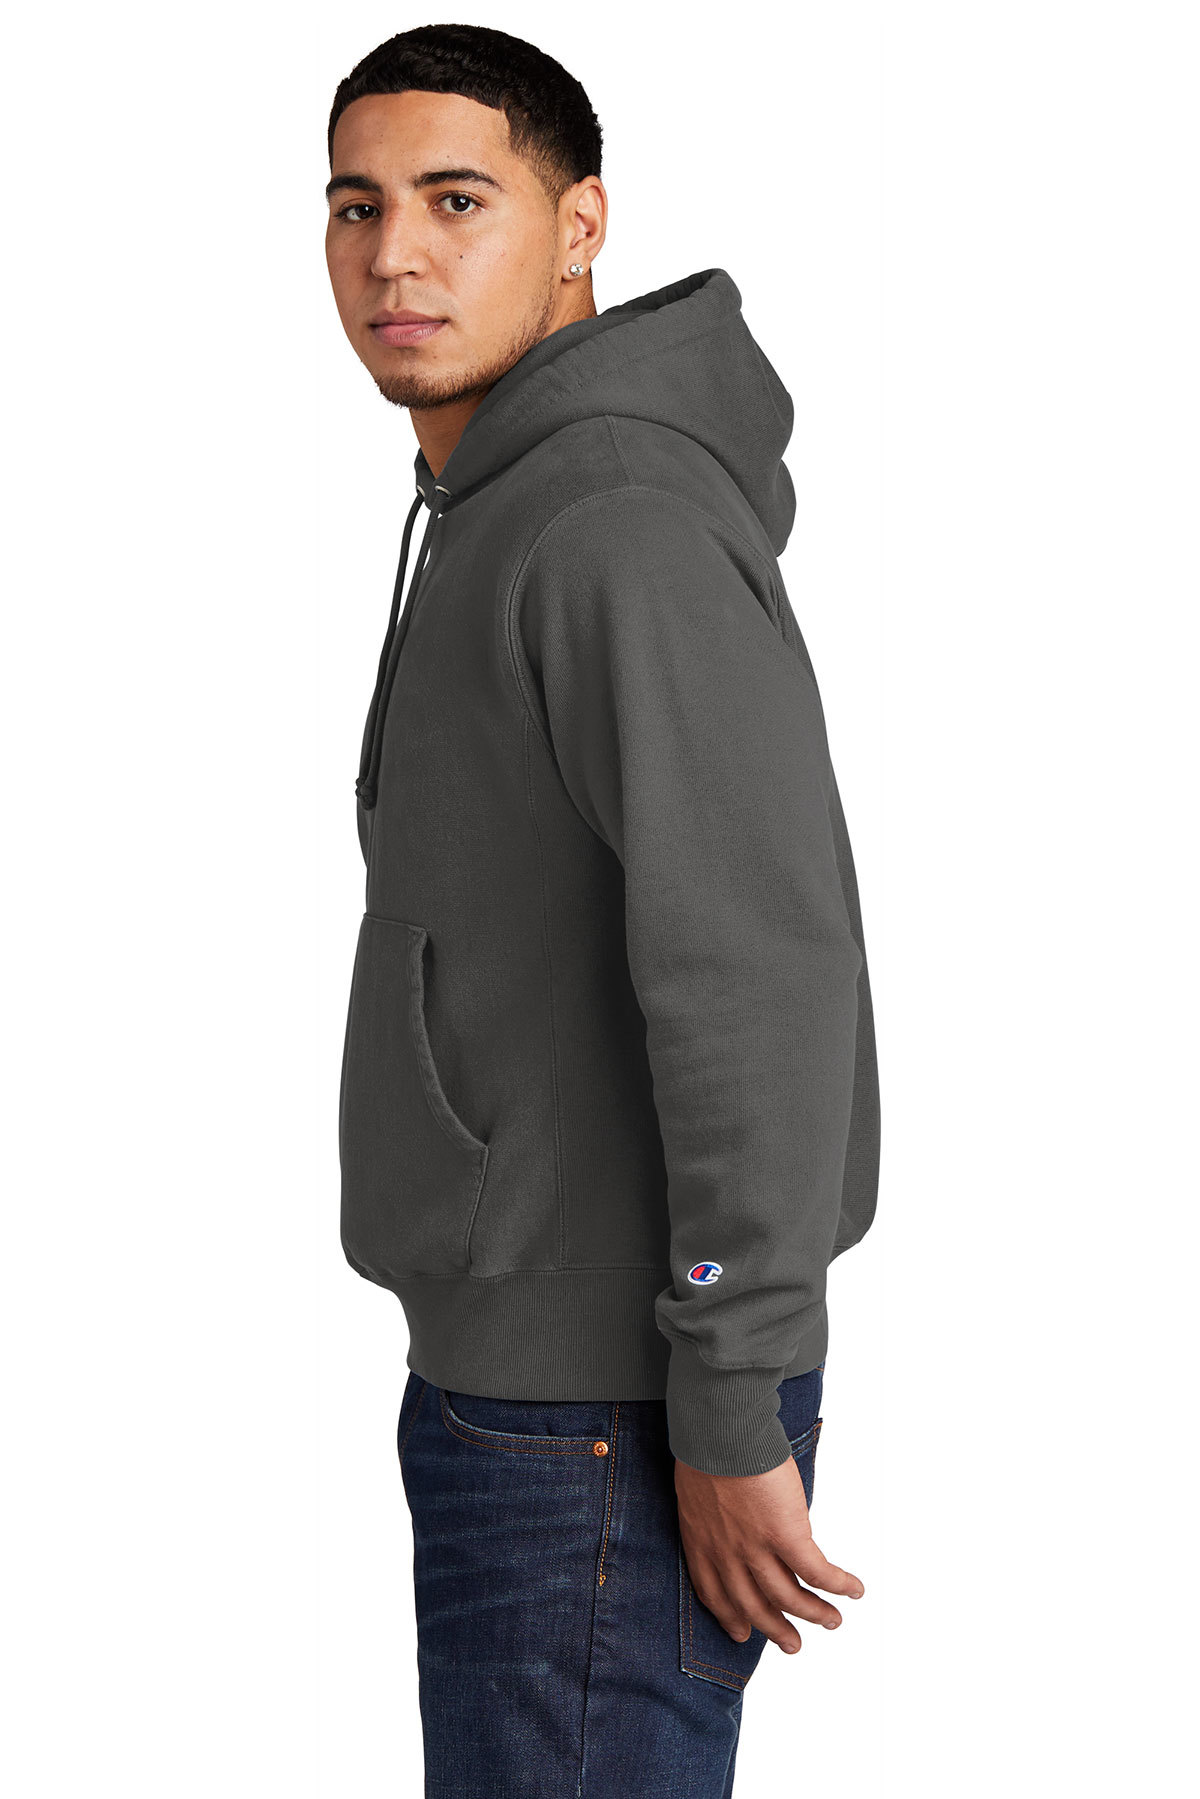 Champion Reverse Weave Garment-Dyed Hooded Sweatshirt | Product | SanMar